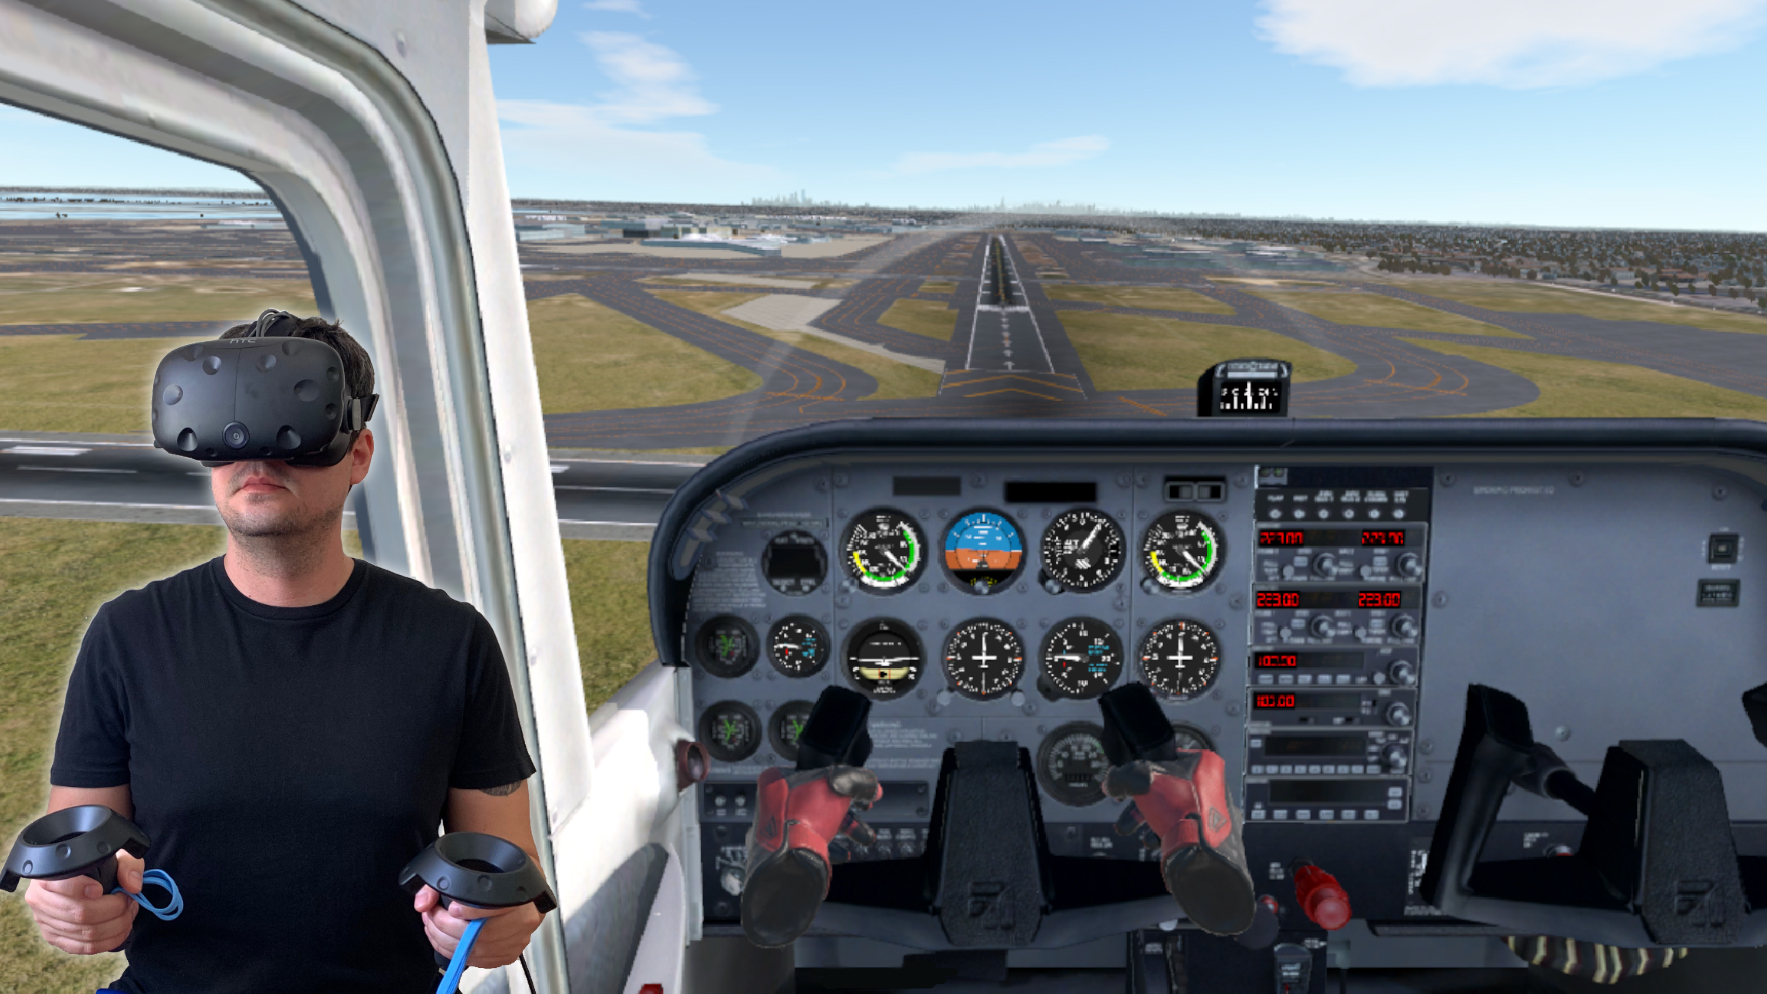 instaling Airplane Flight Pilot Simulator